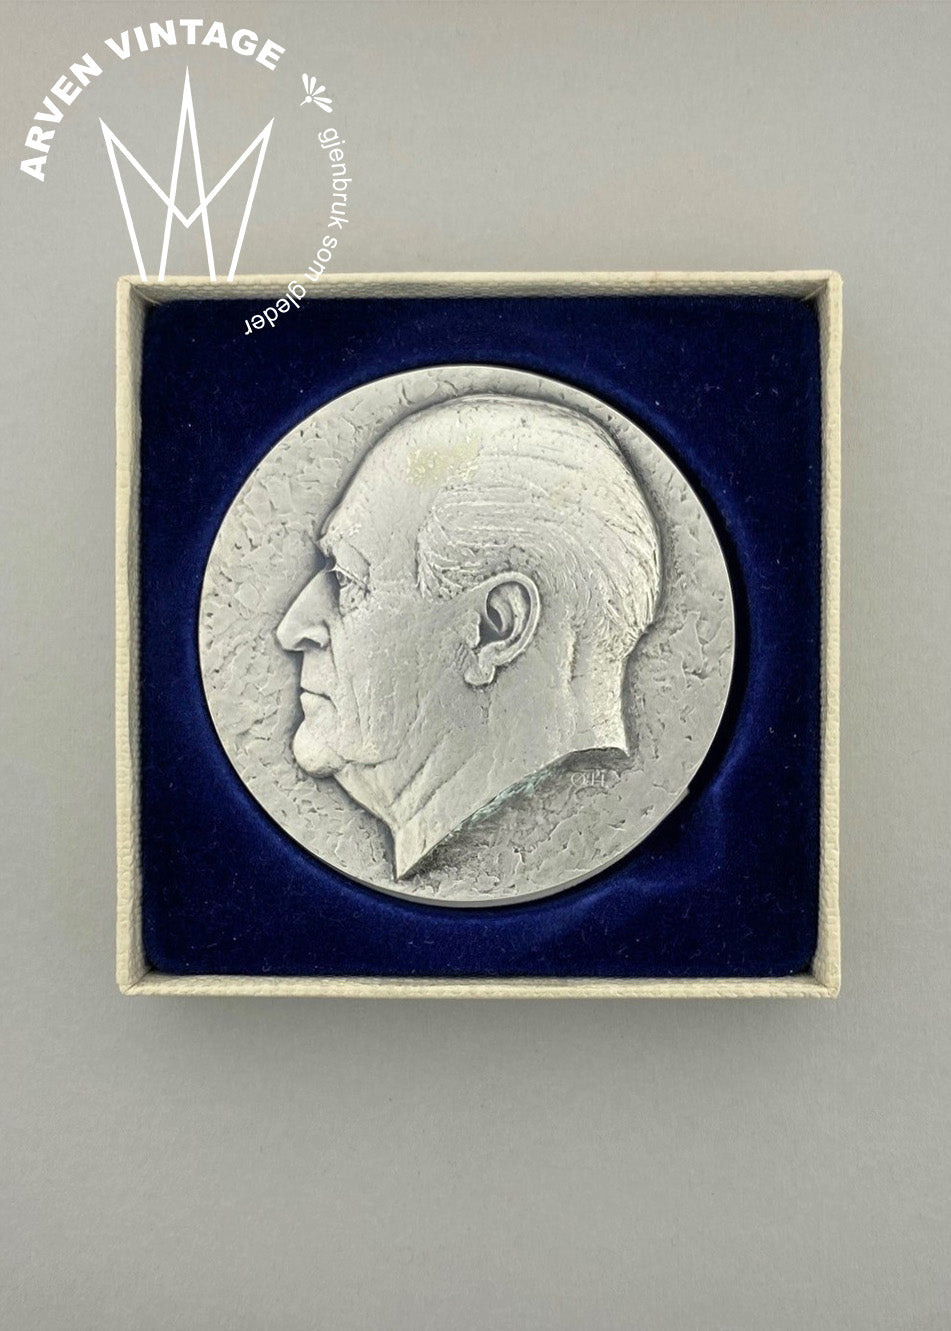 Vintage Kong Olav jubileumsmedalje